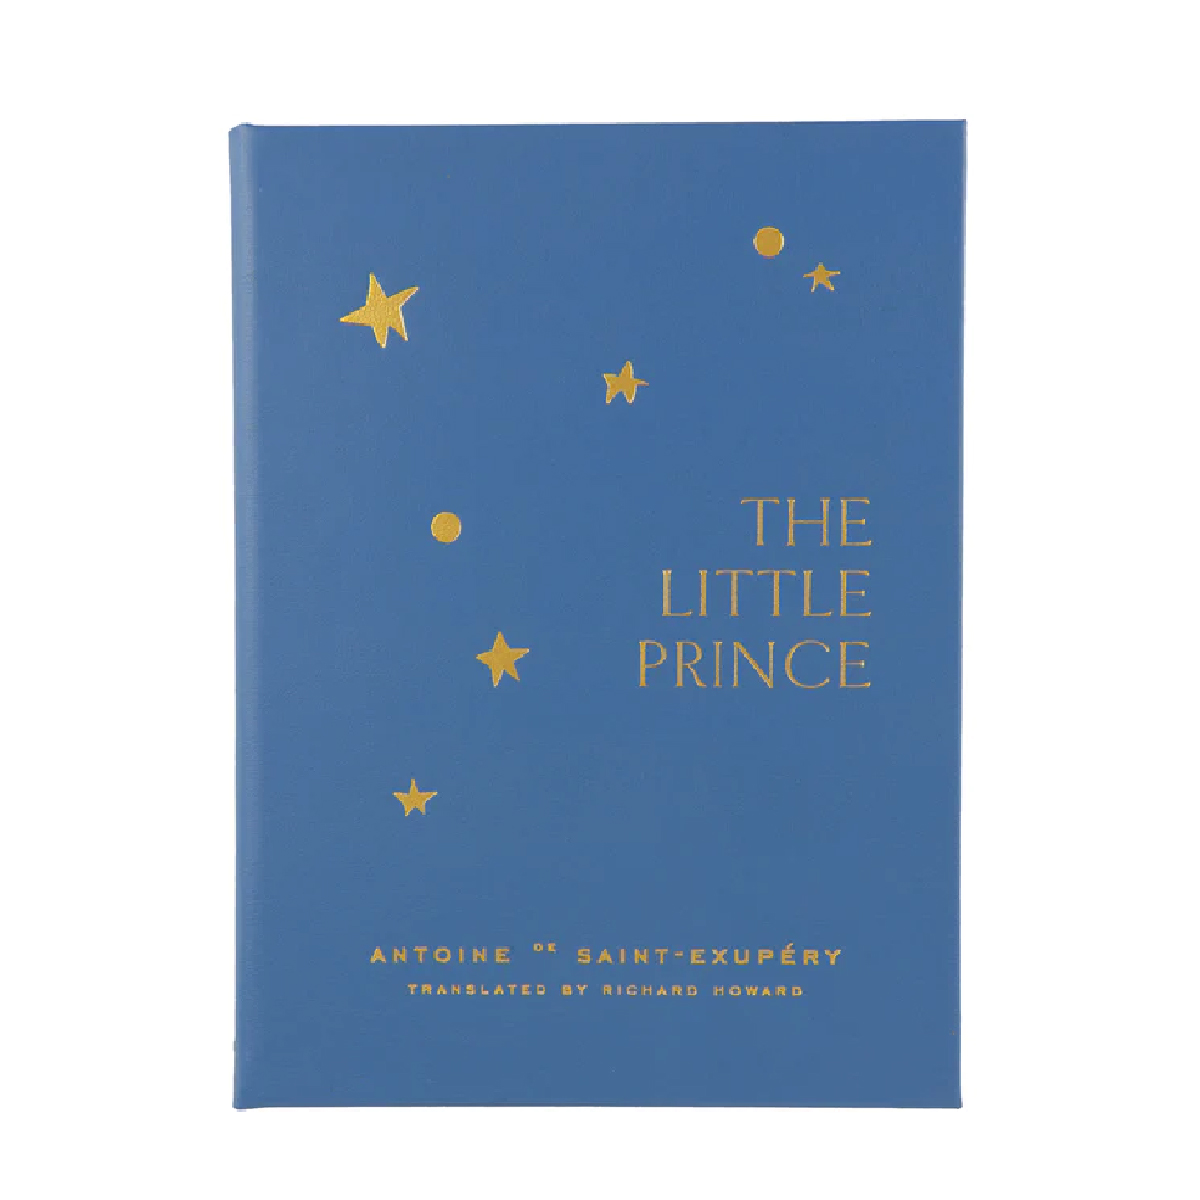 Graphic Image - "The Little Prince" by Antoine de Saint-Exupery